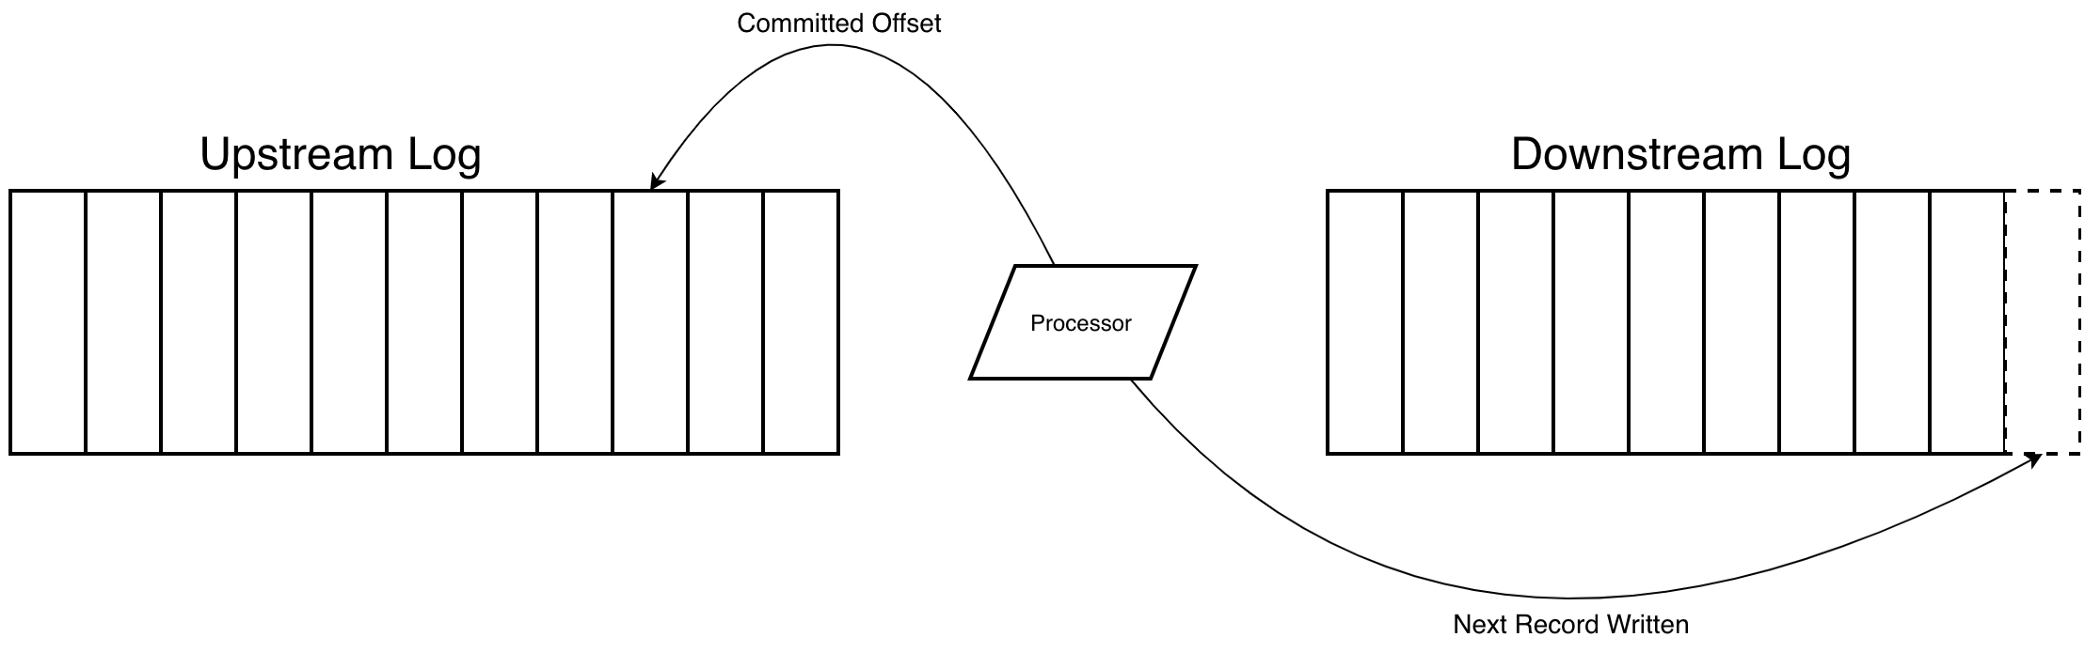 kafka-log-offset-diagram